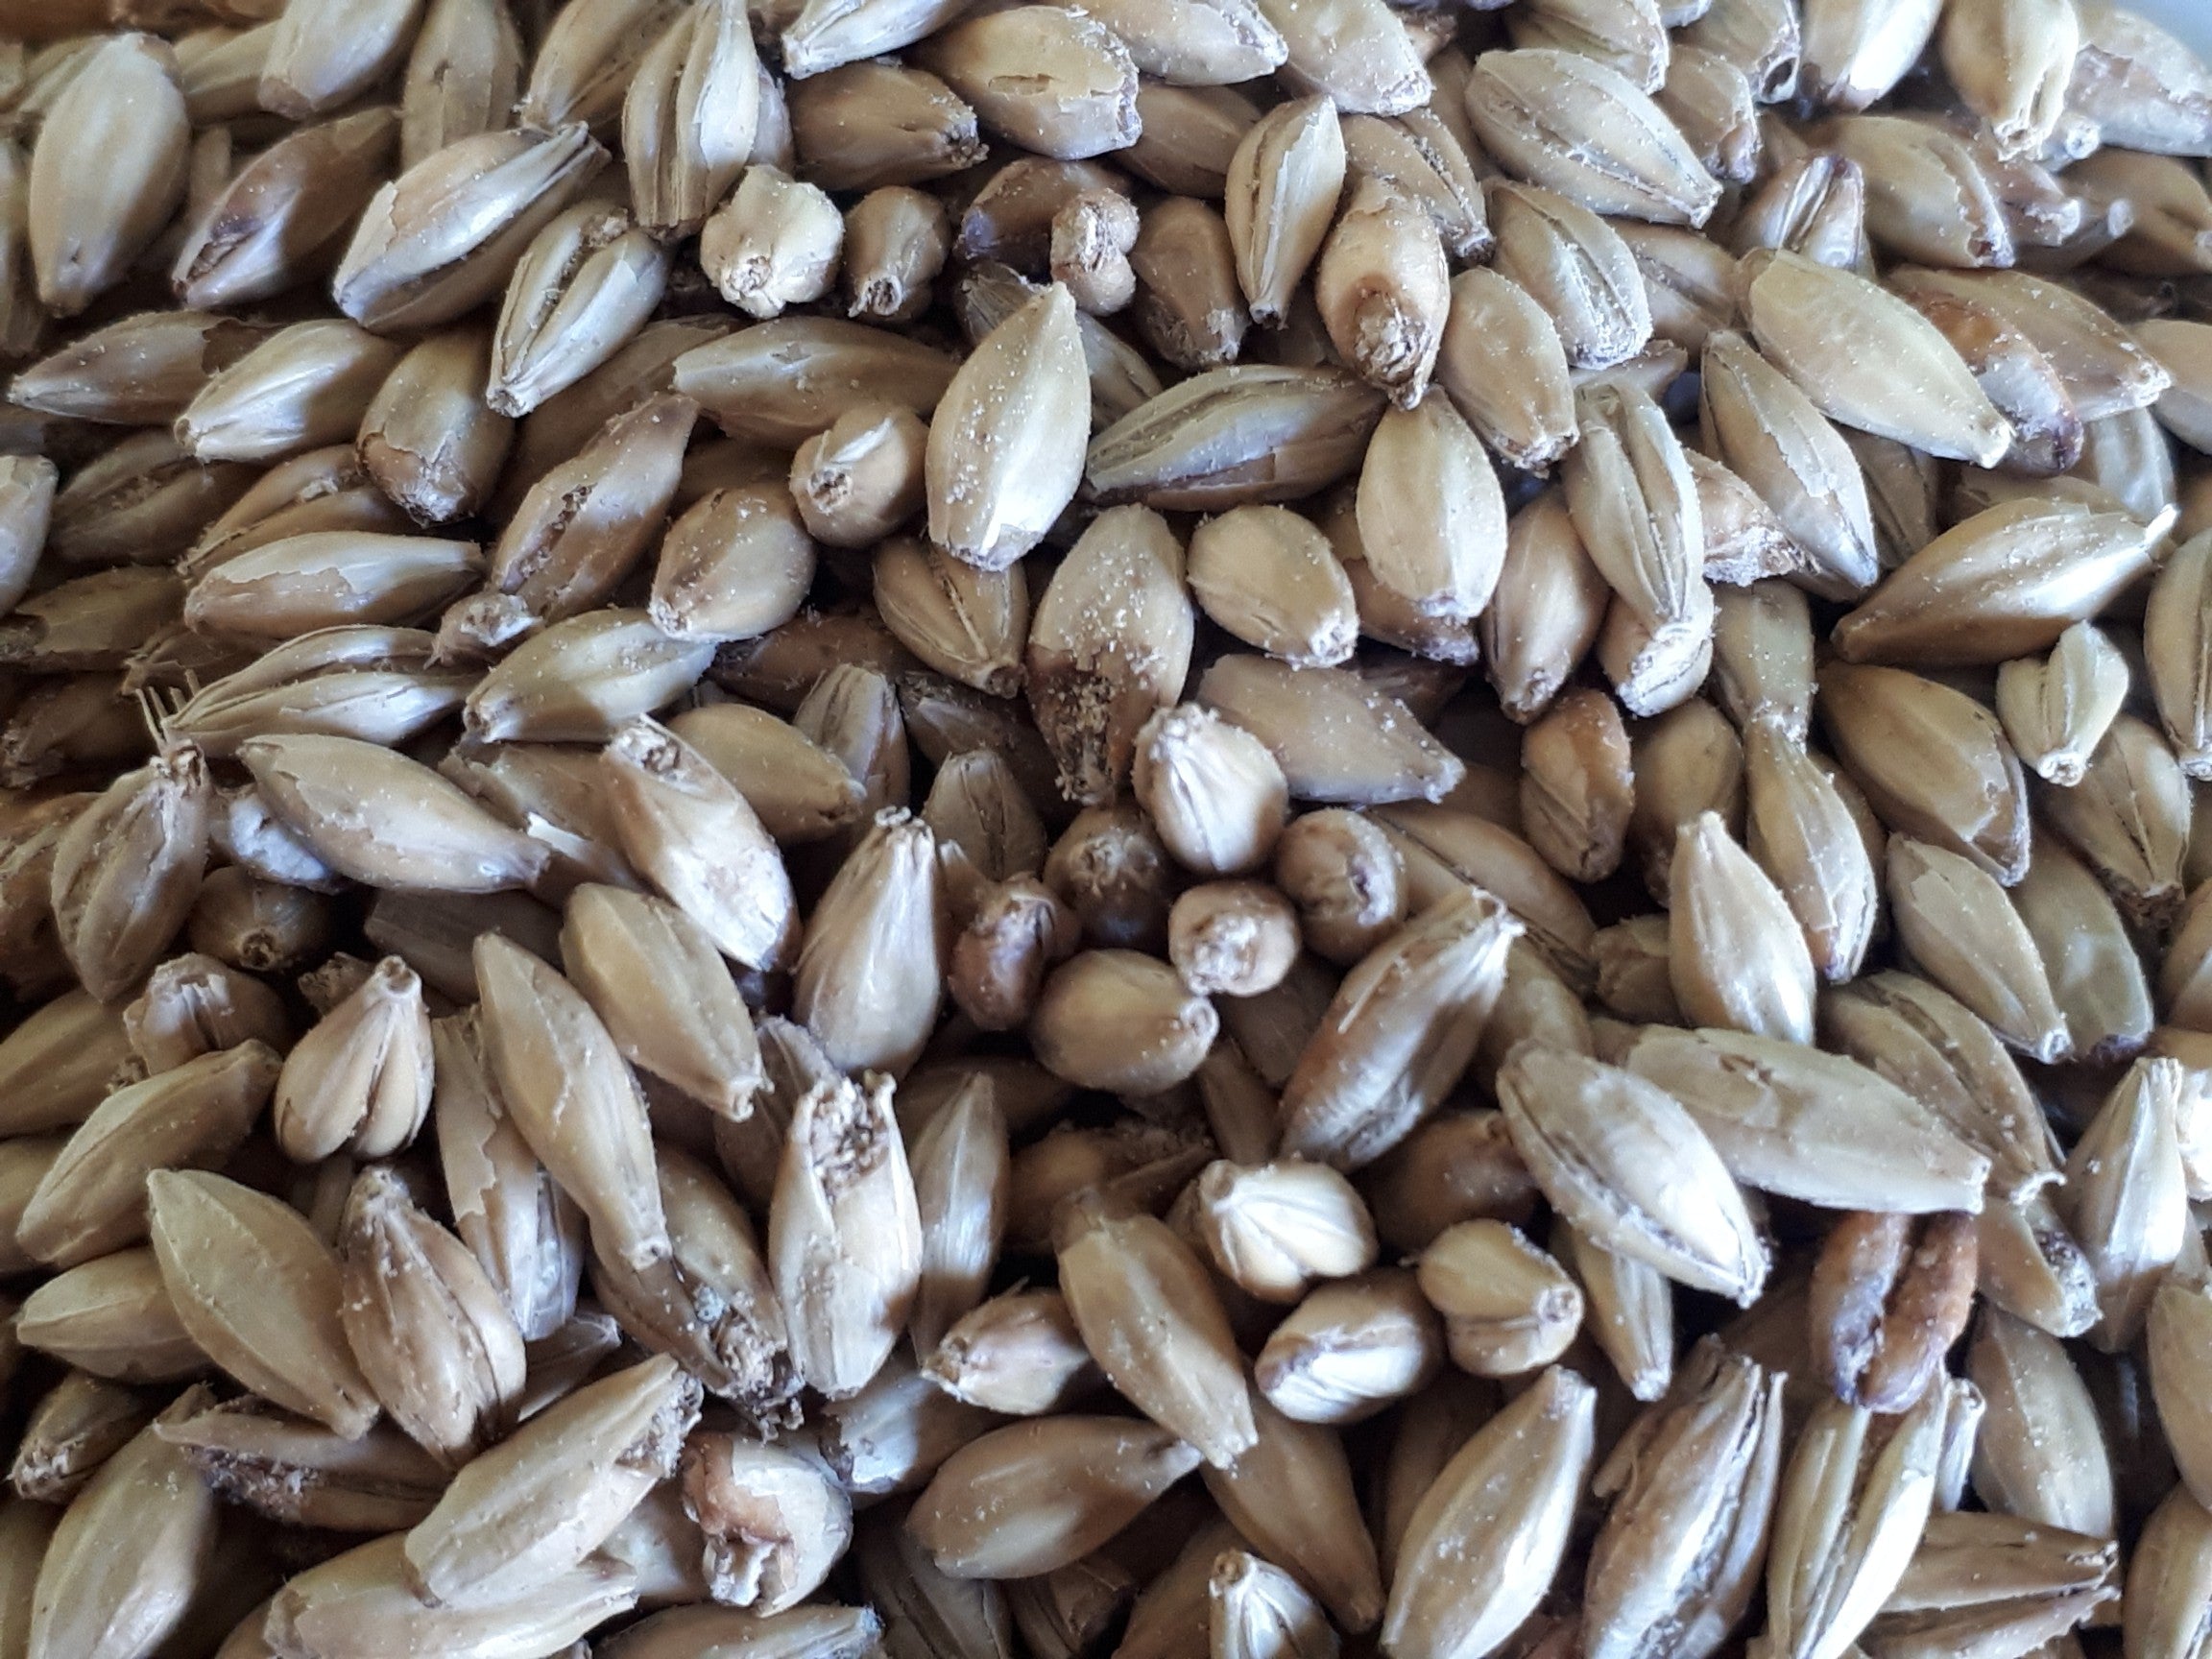 Malted Barley Seeds